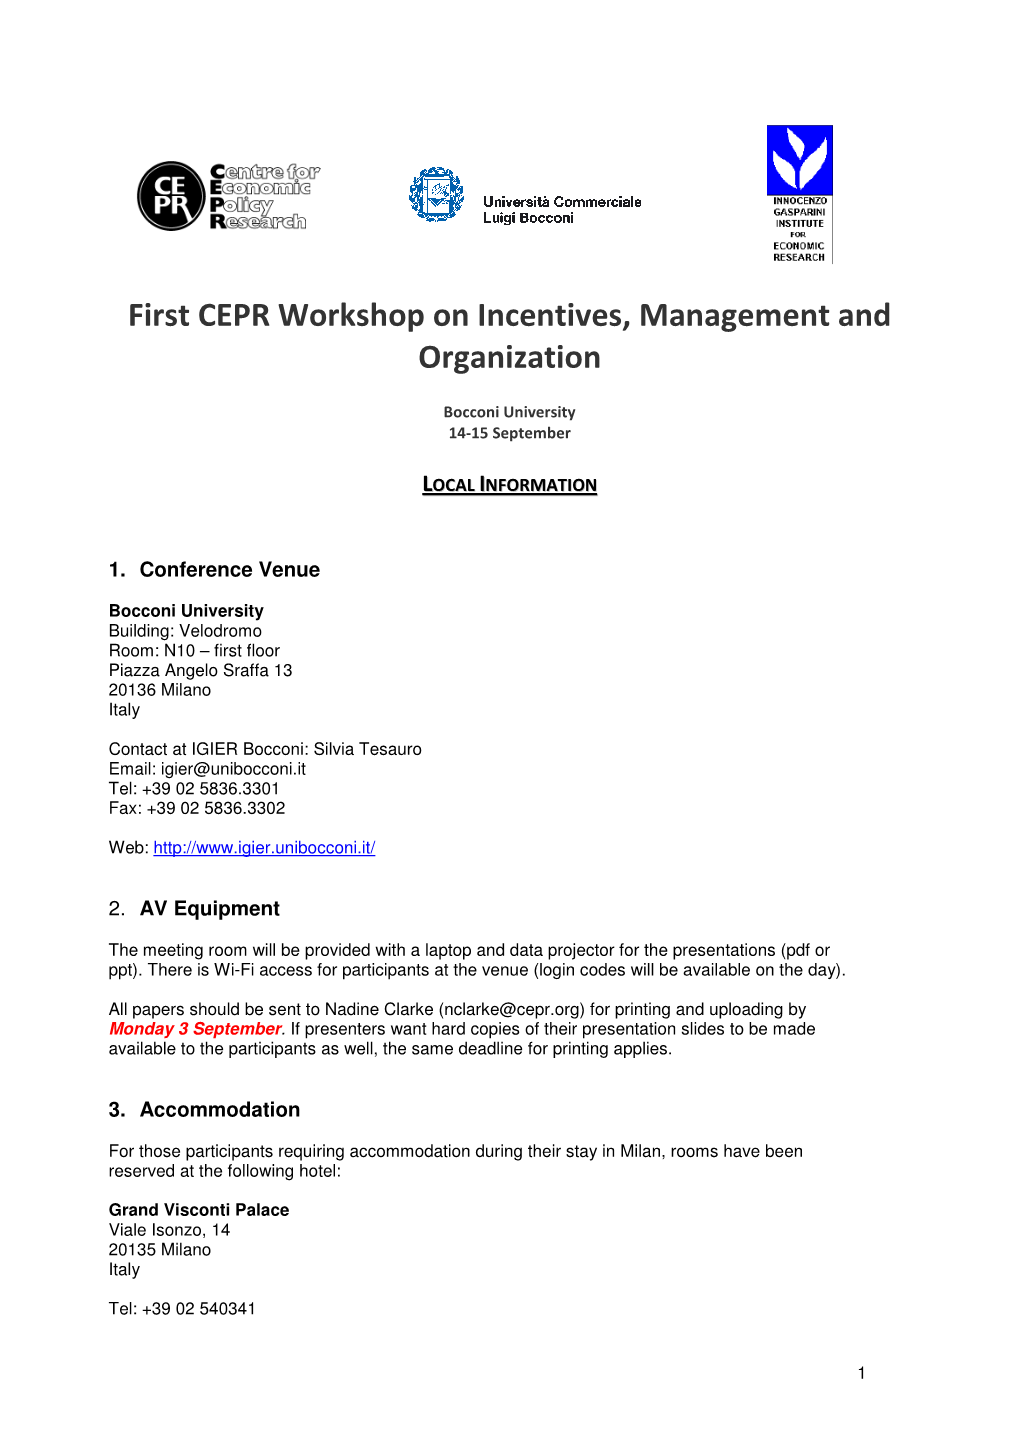 First CEPR Workshop on Incentives, Management and Organization